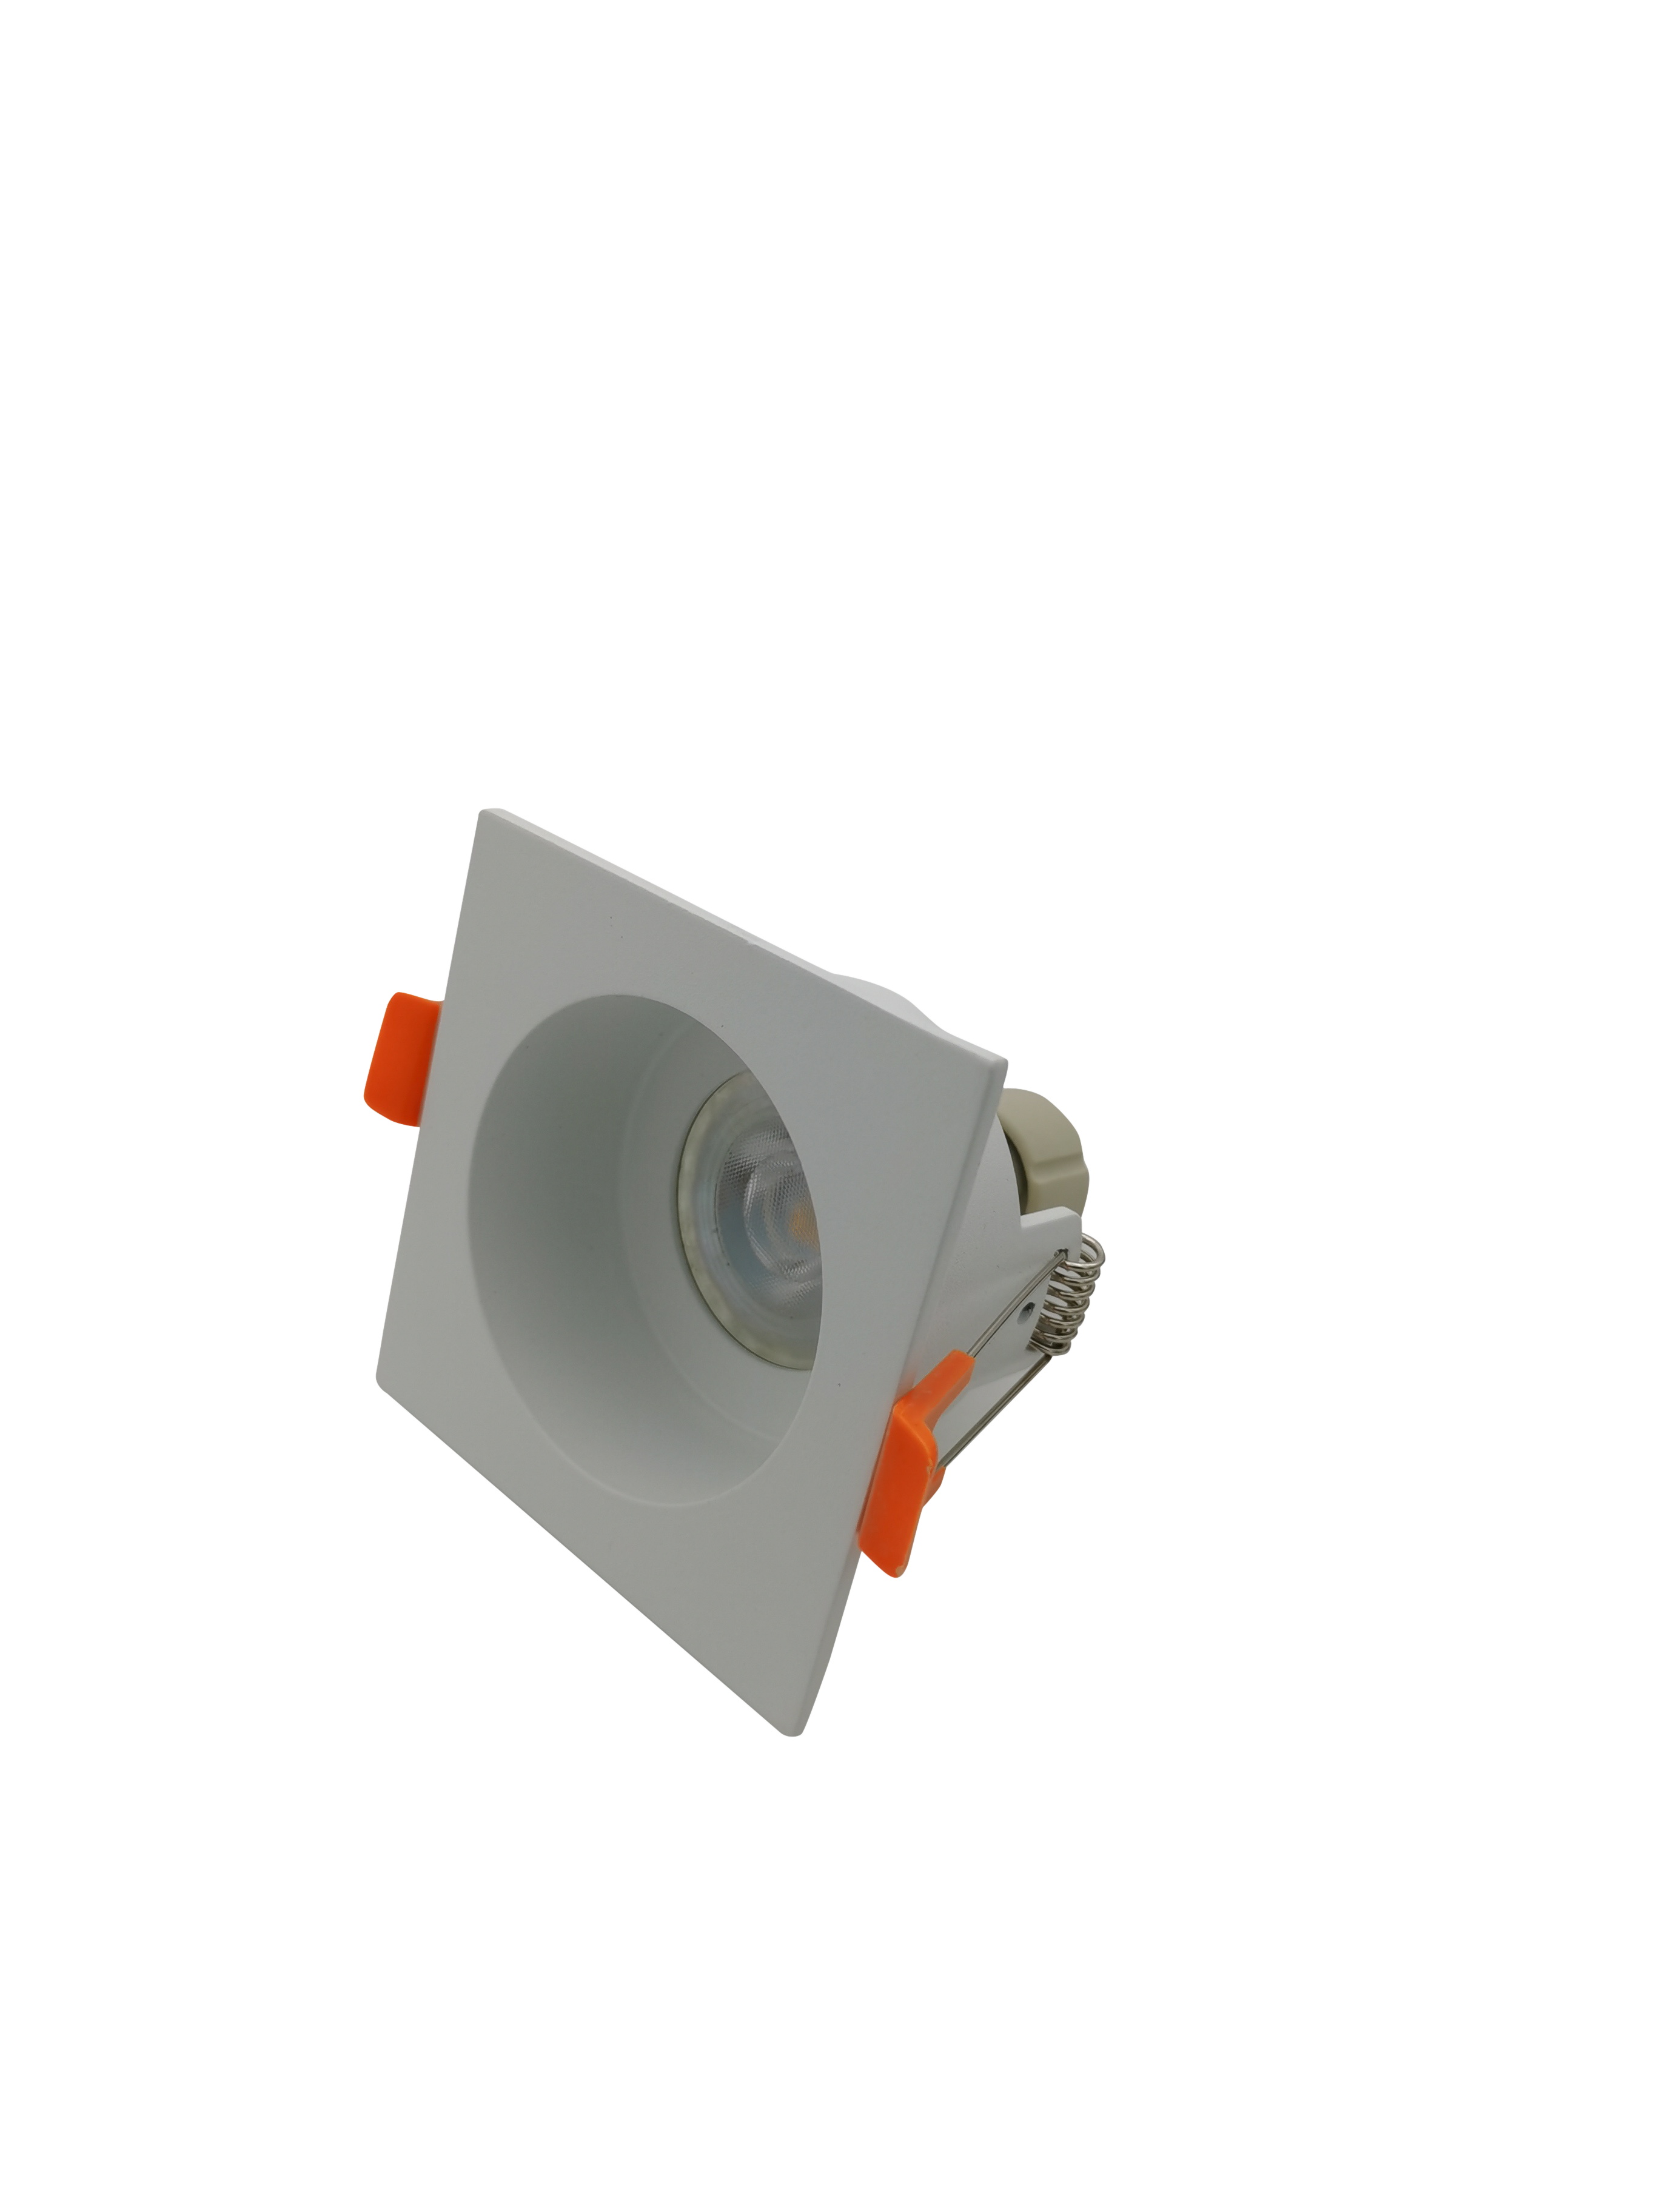 88*88mm Non-adjustable Recessed LED Spot Light White Square Shape GU10 Fixture Frame